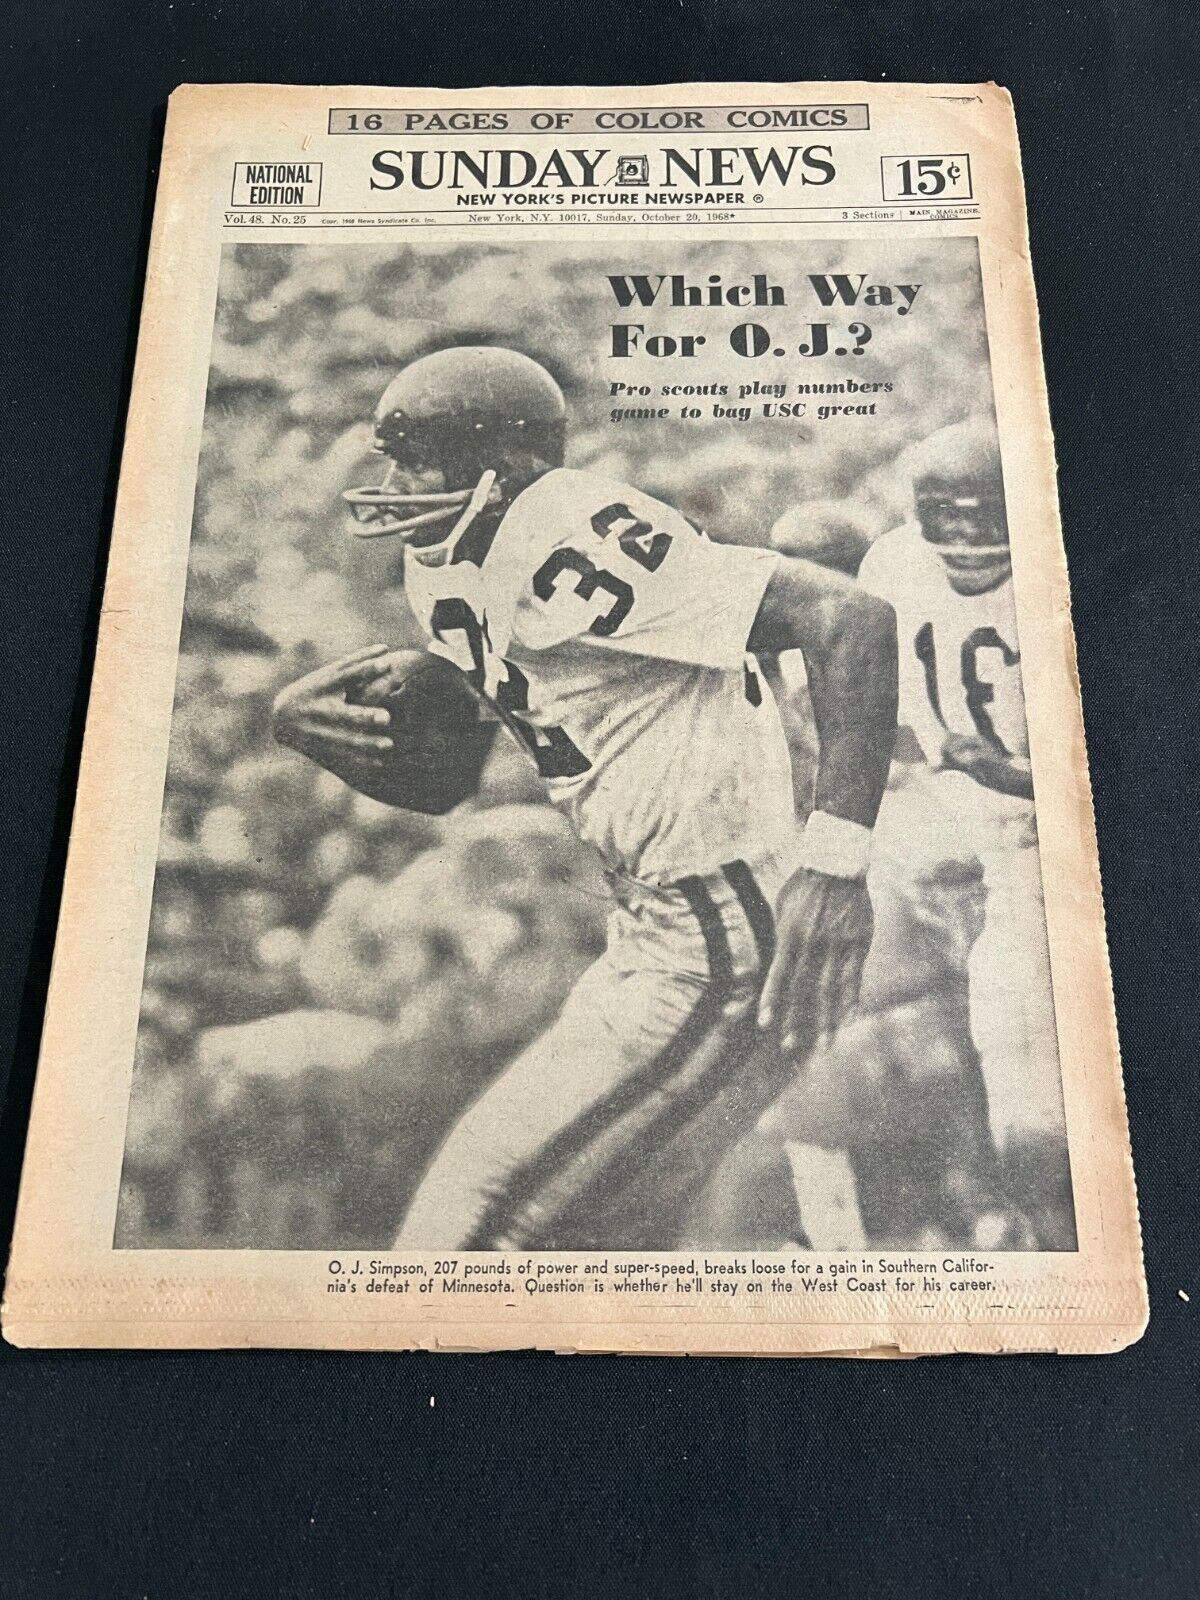 SUNDAY NEW YORK NEWS Tabloid October 20, 1968 O.J. SIMPSON Cover Story